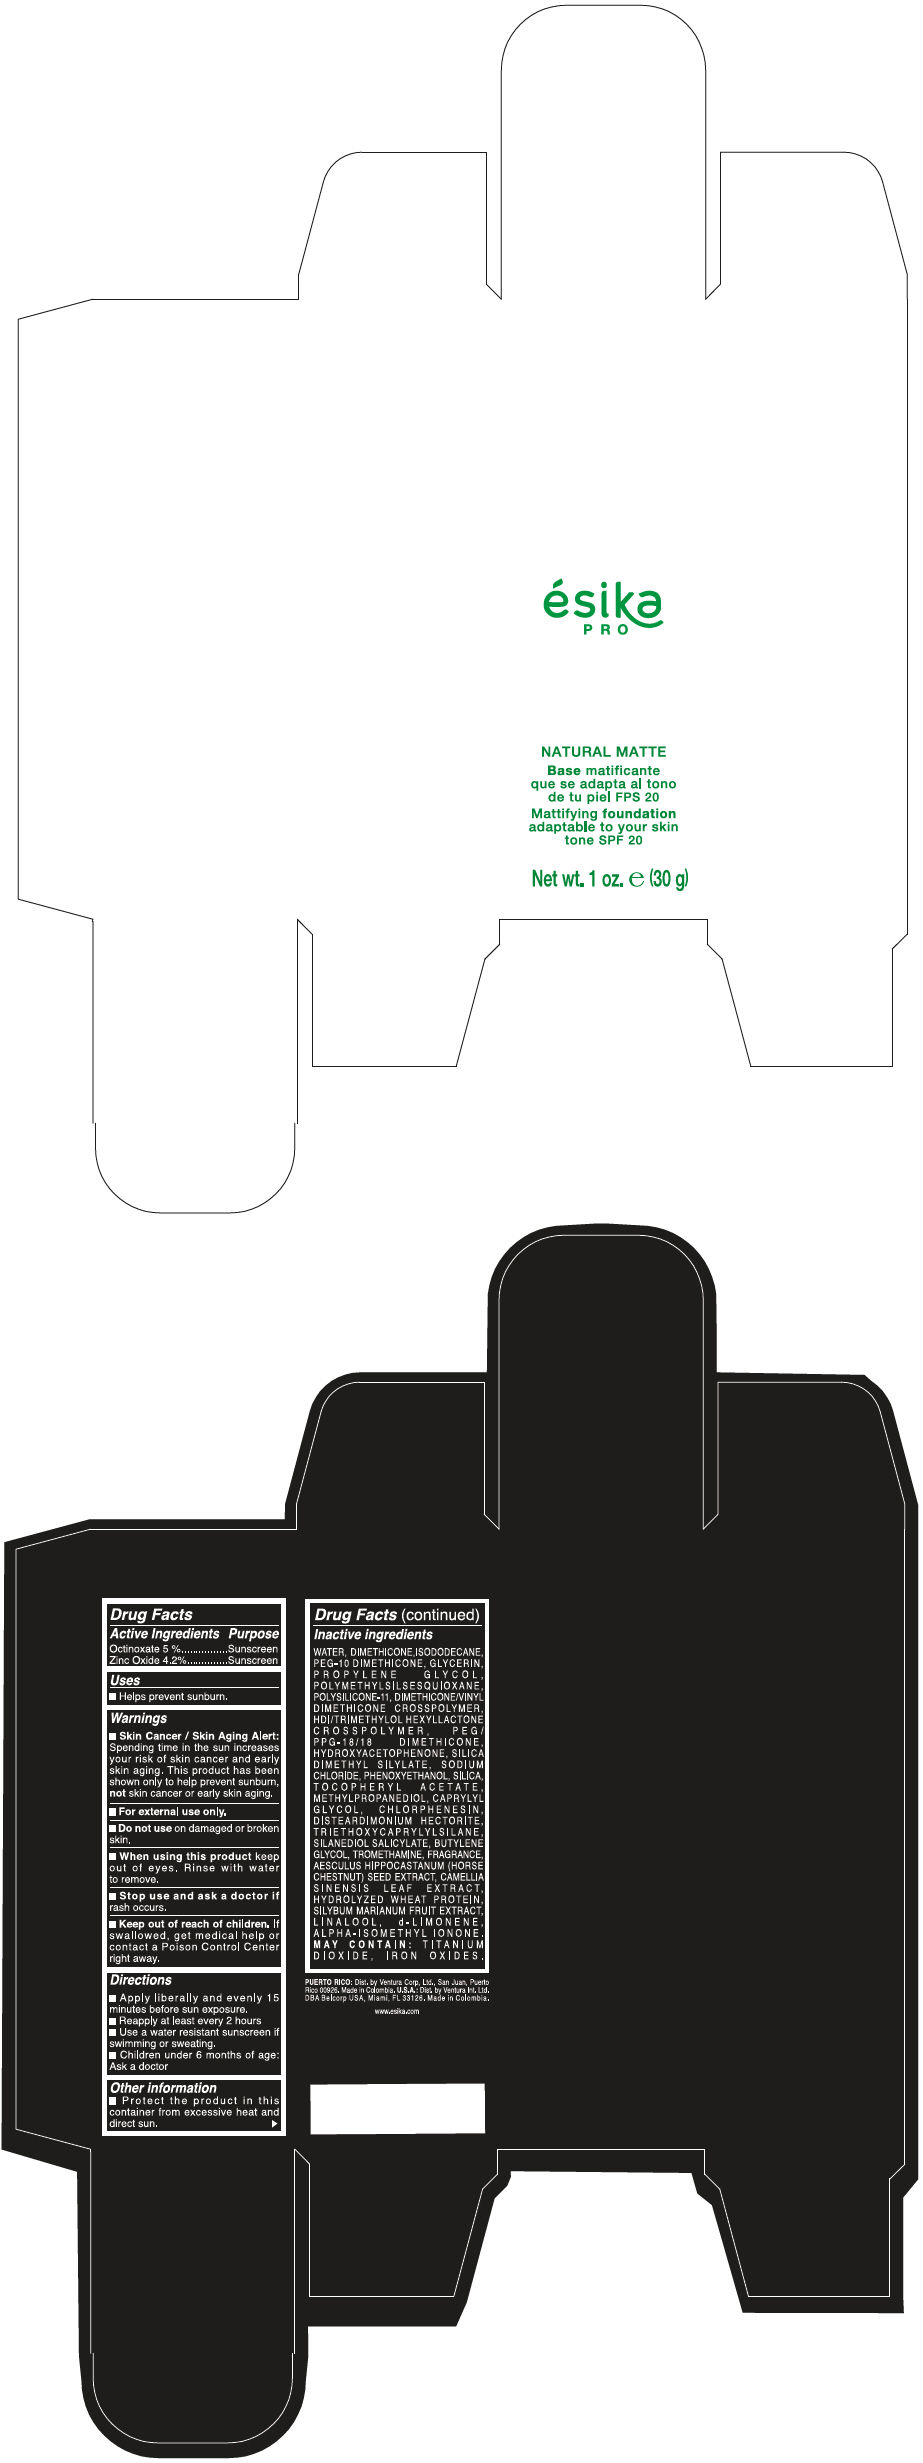 PRINCIPAL DISPLAY PANEL - 30 g Bottle Box - Medio3/Beige